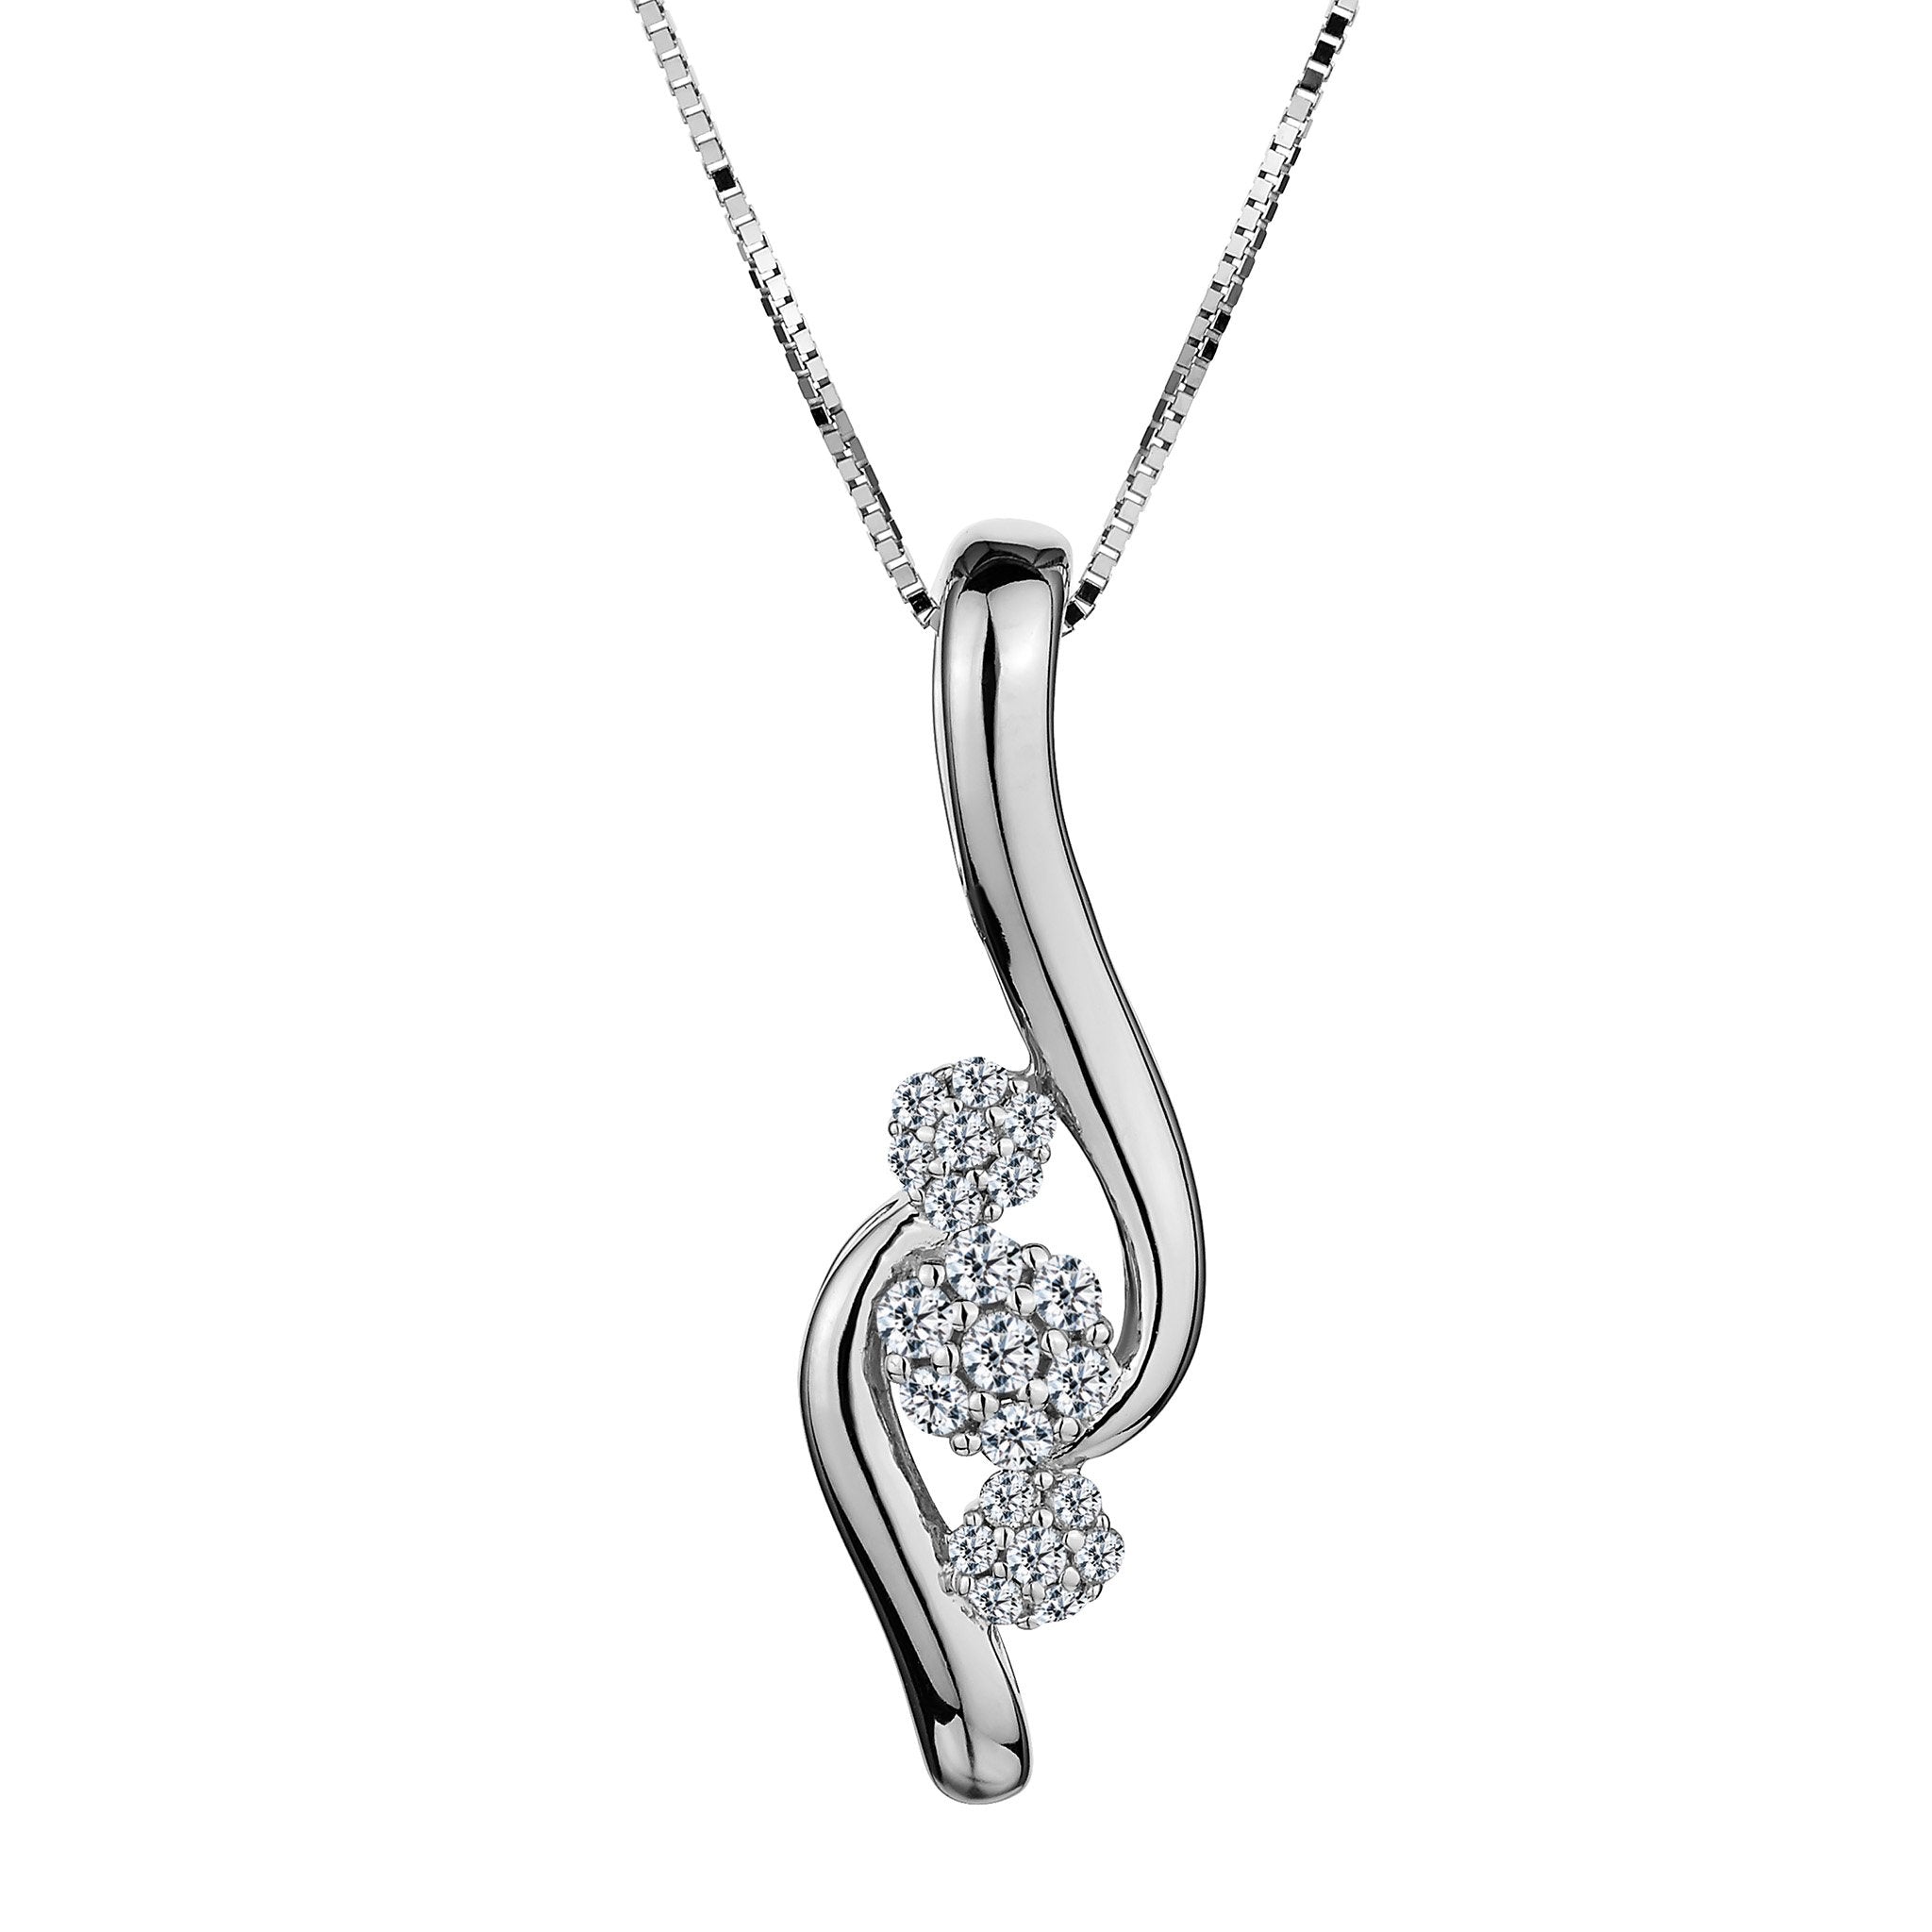 .15 Carat "Past, Present, Future" Diamond Pendant,  10kt White Gold. Necklaces and Pendants. Griffin Jewellery Designs.